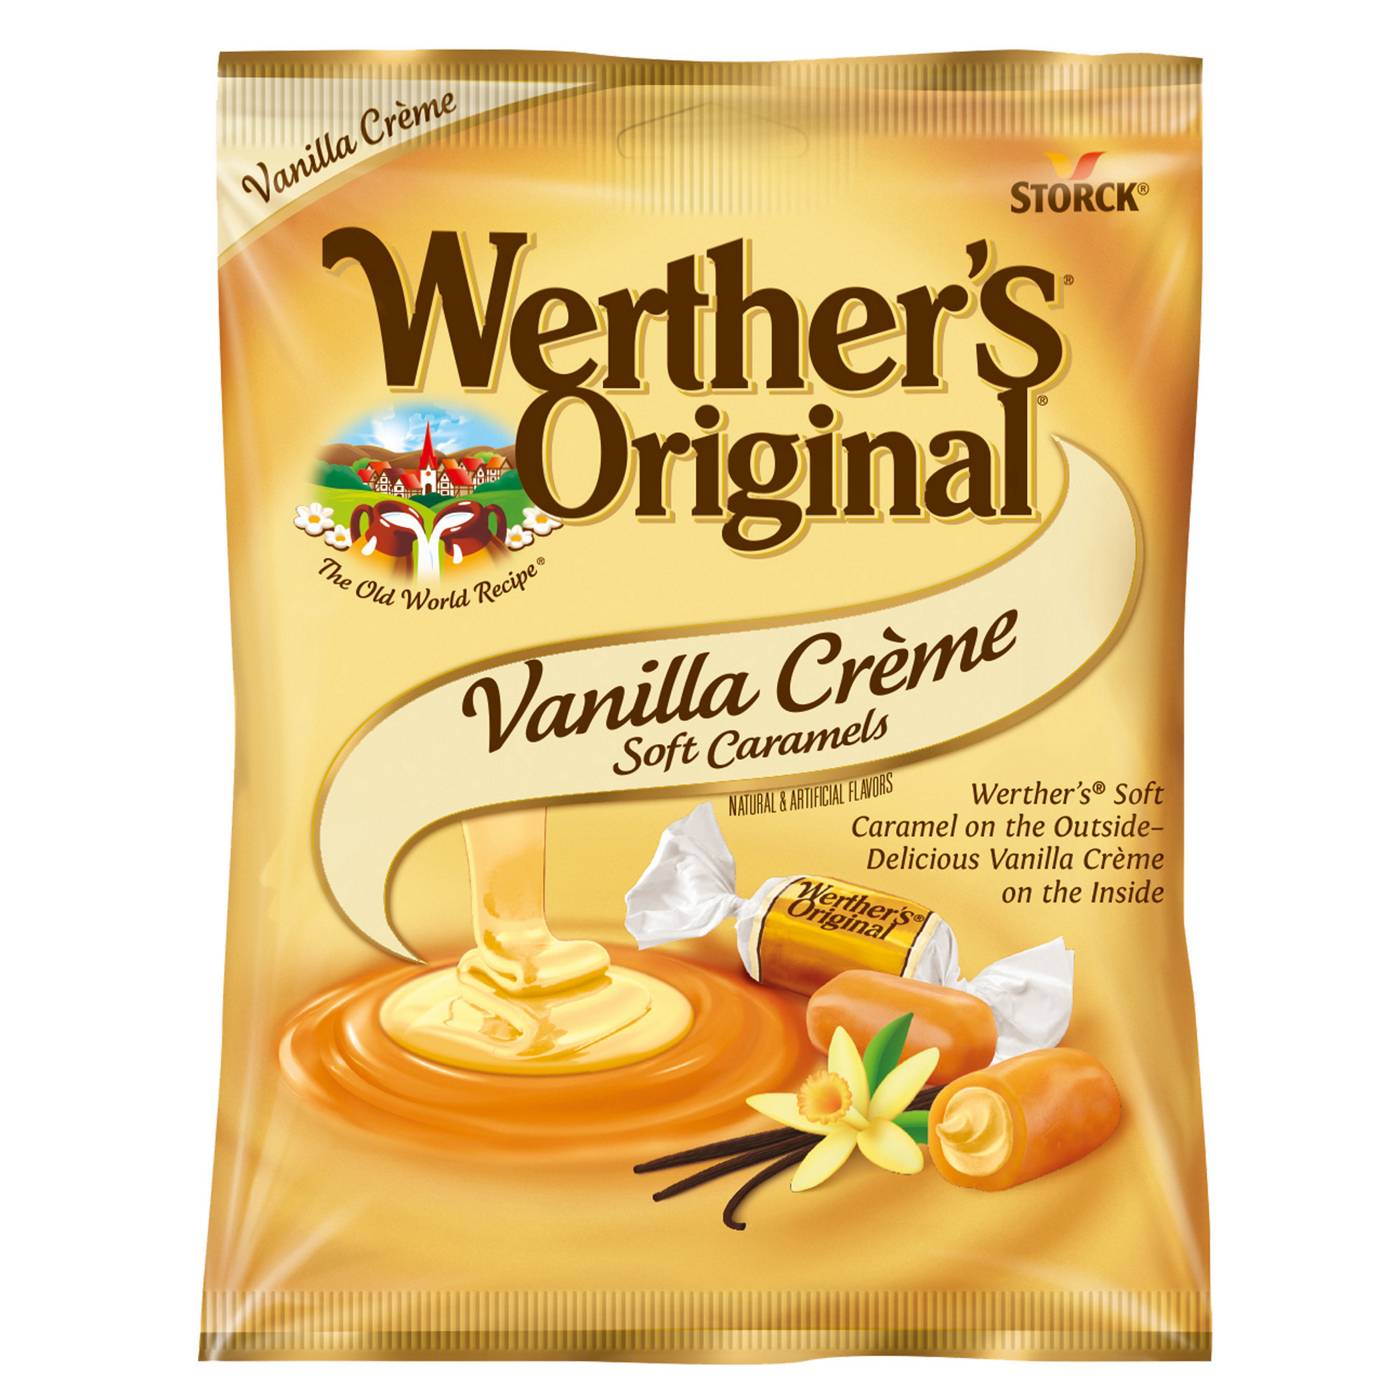 Werther's Original Soft Vanilla Creme Caramel Candy; image 1 of 6